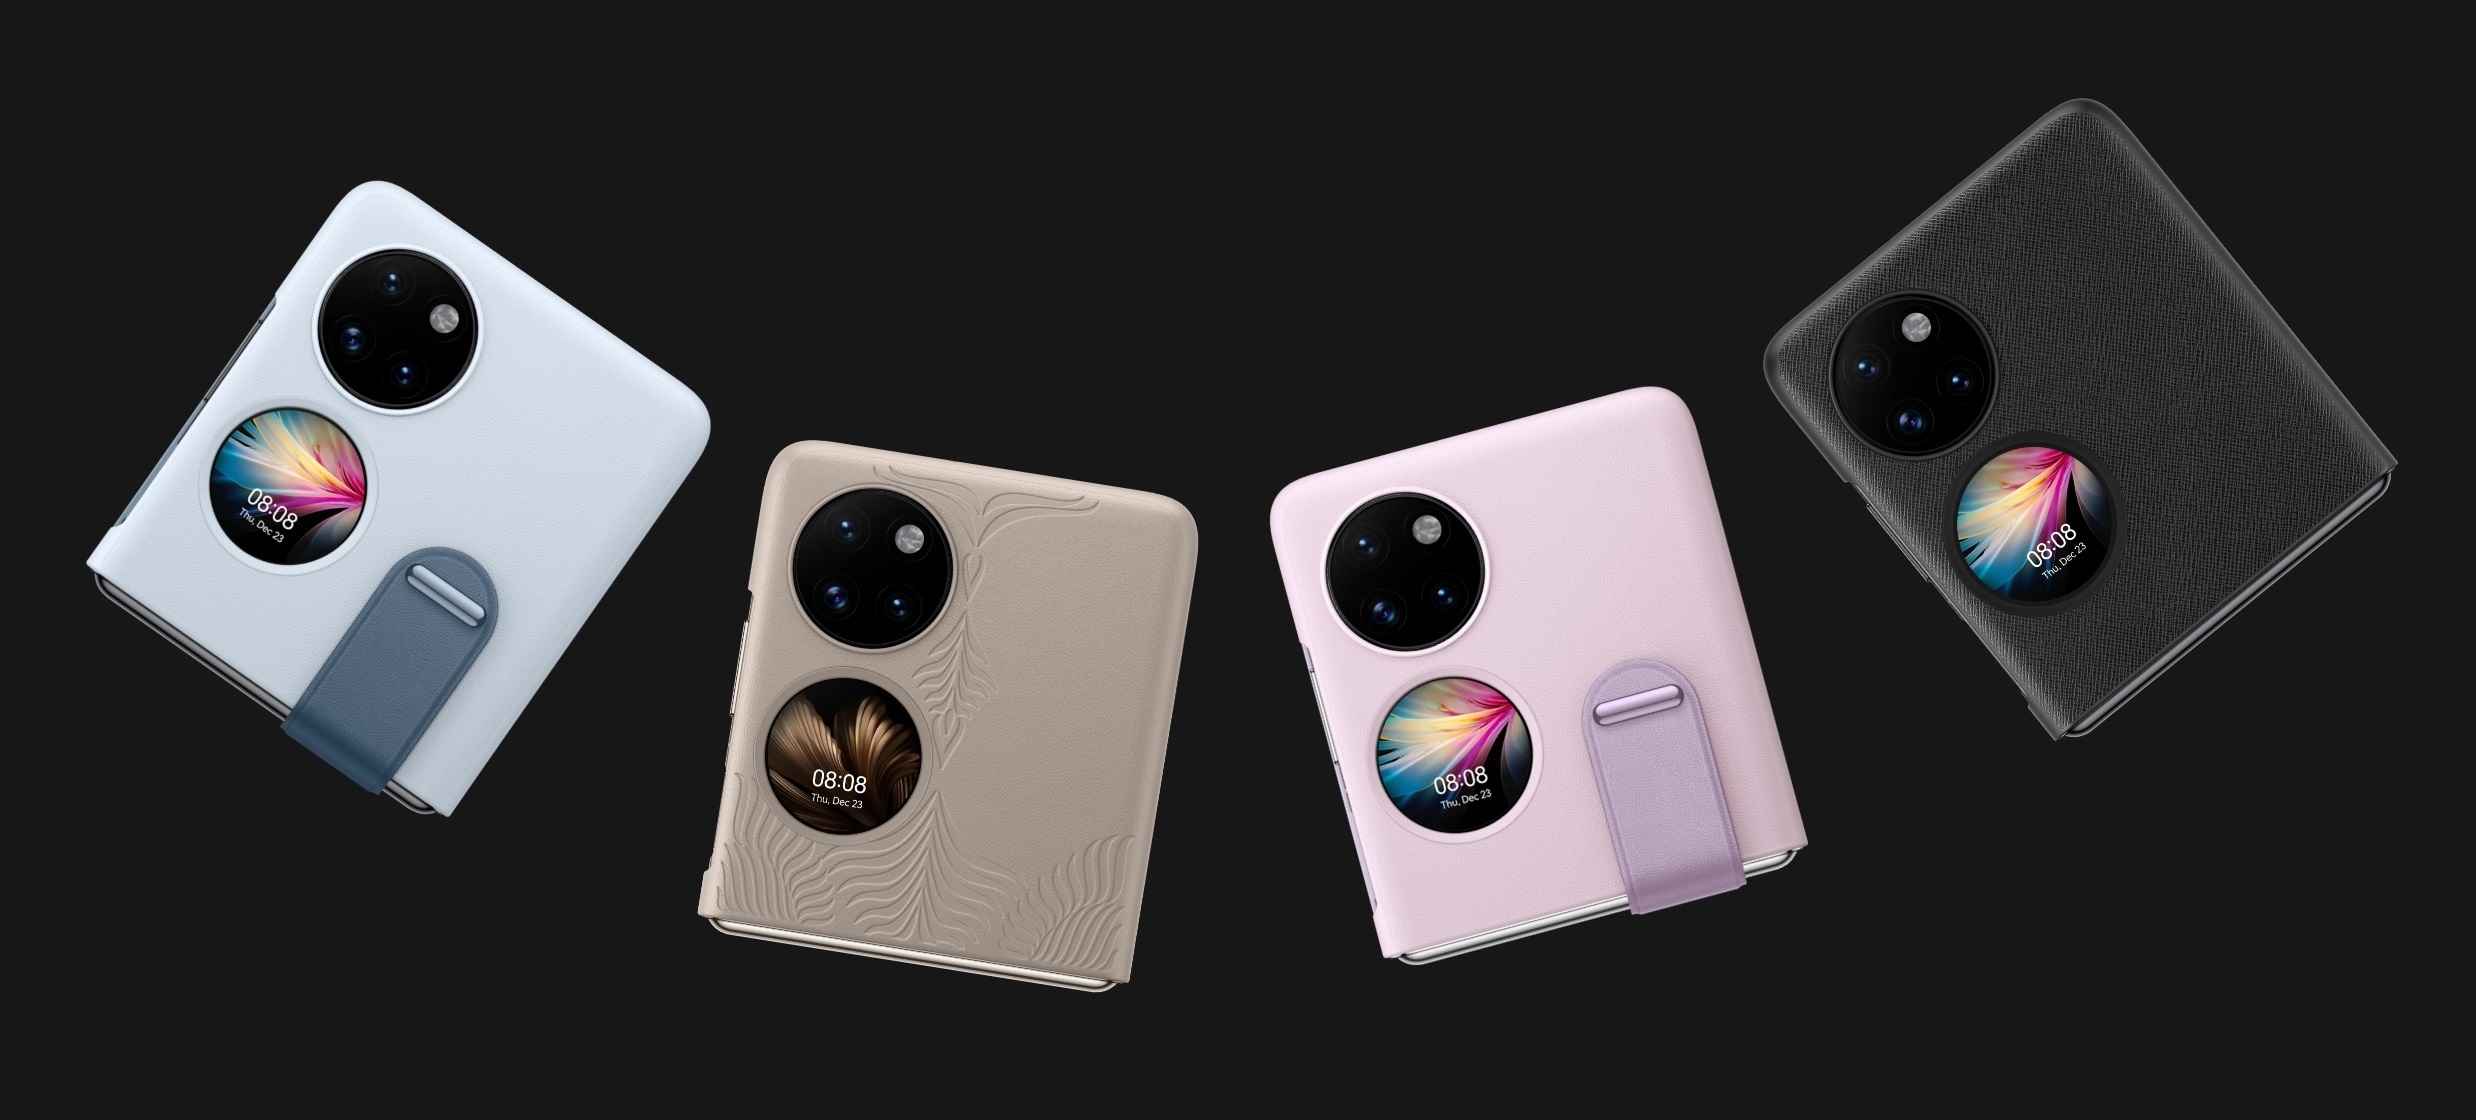 Huawei представила складной смартфон P50 Pocket